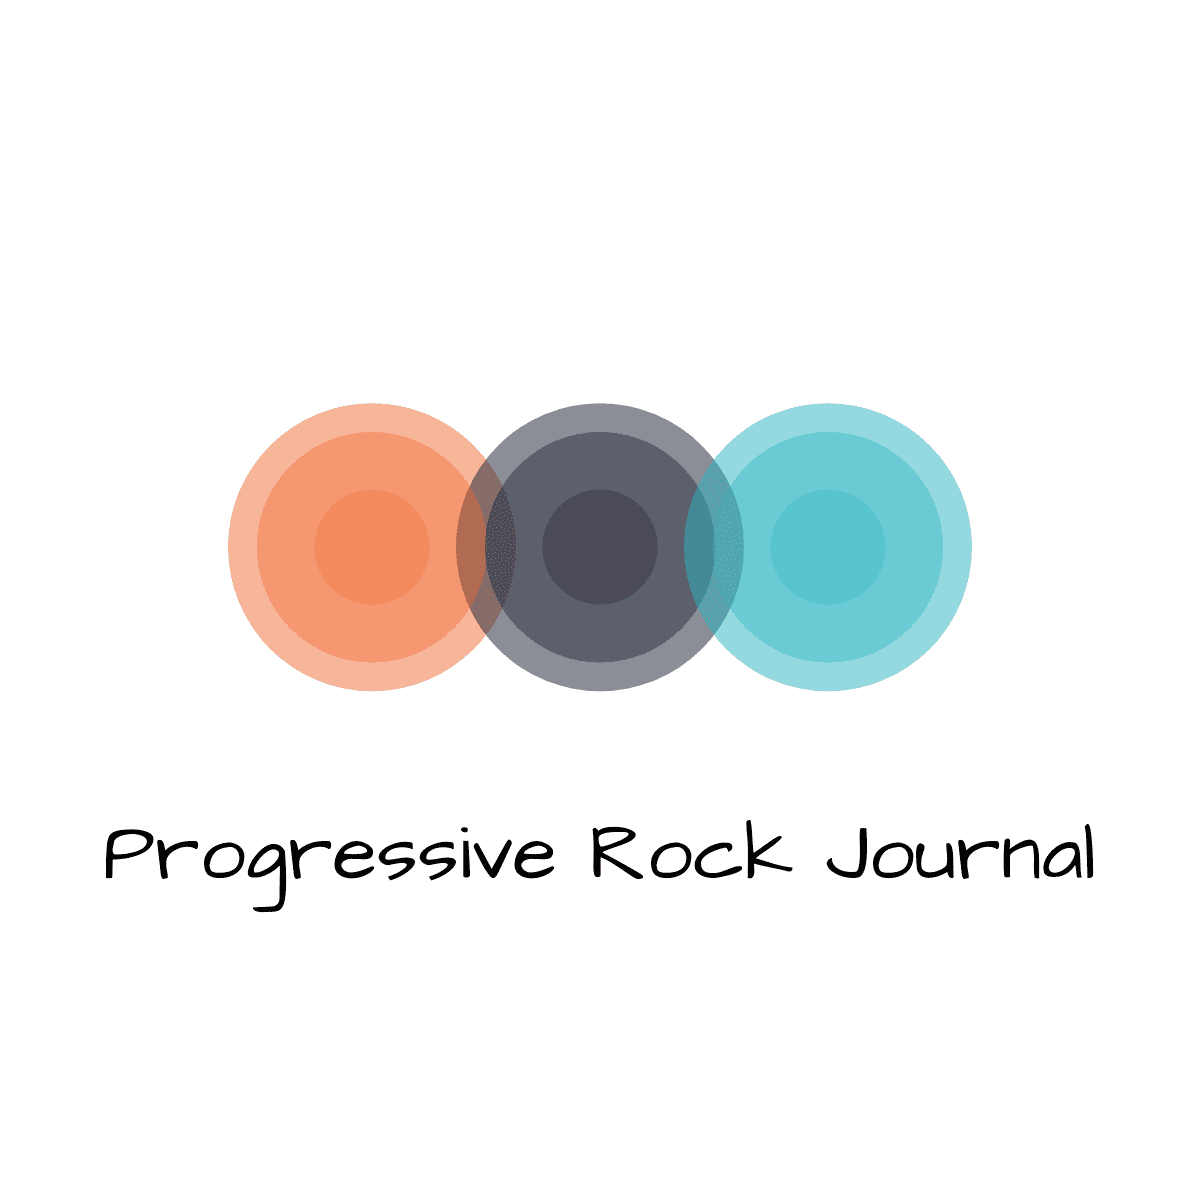 Progressive rock journal